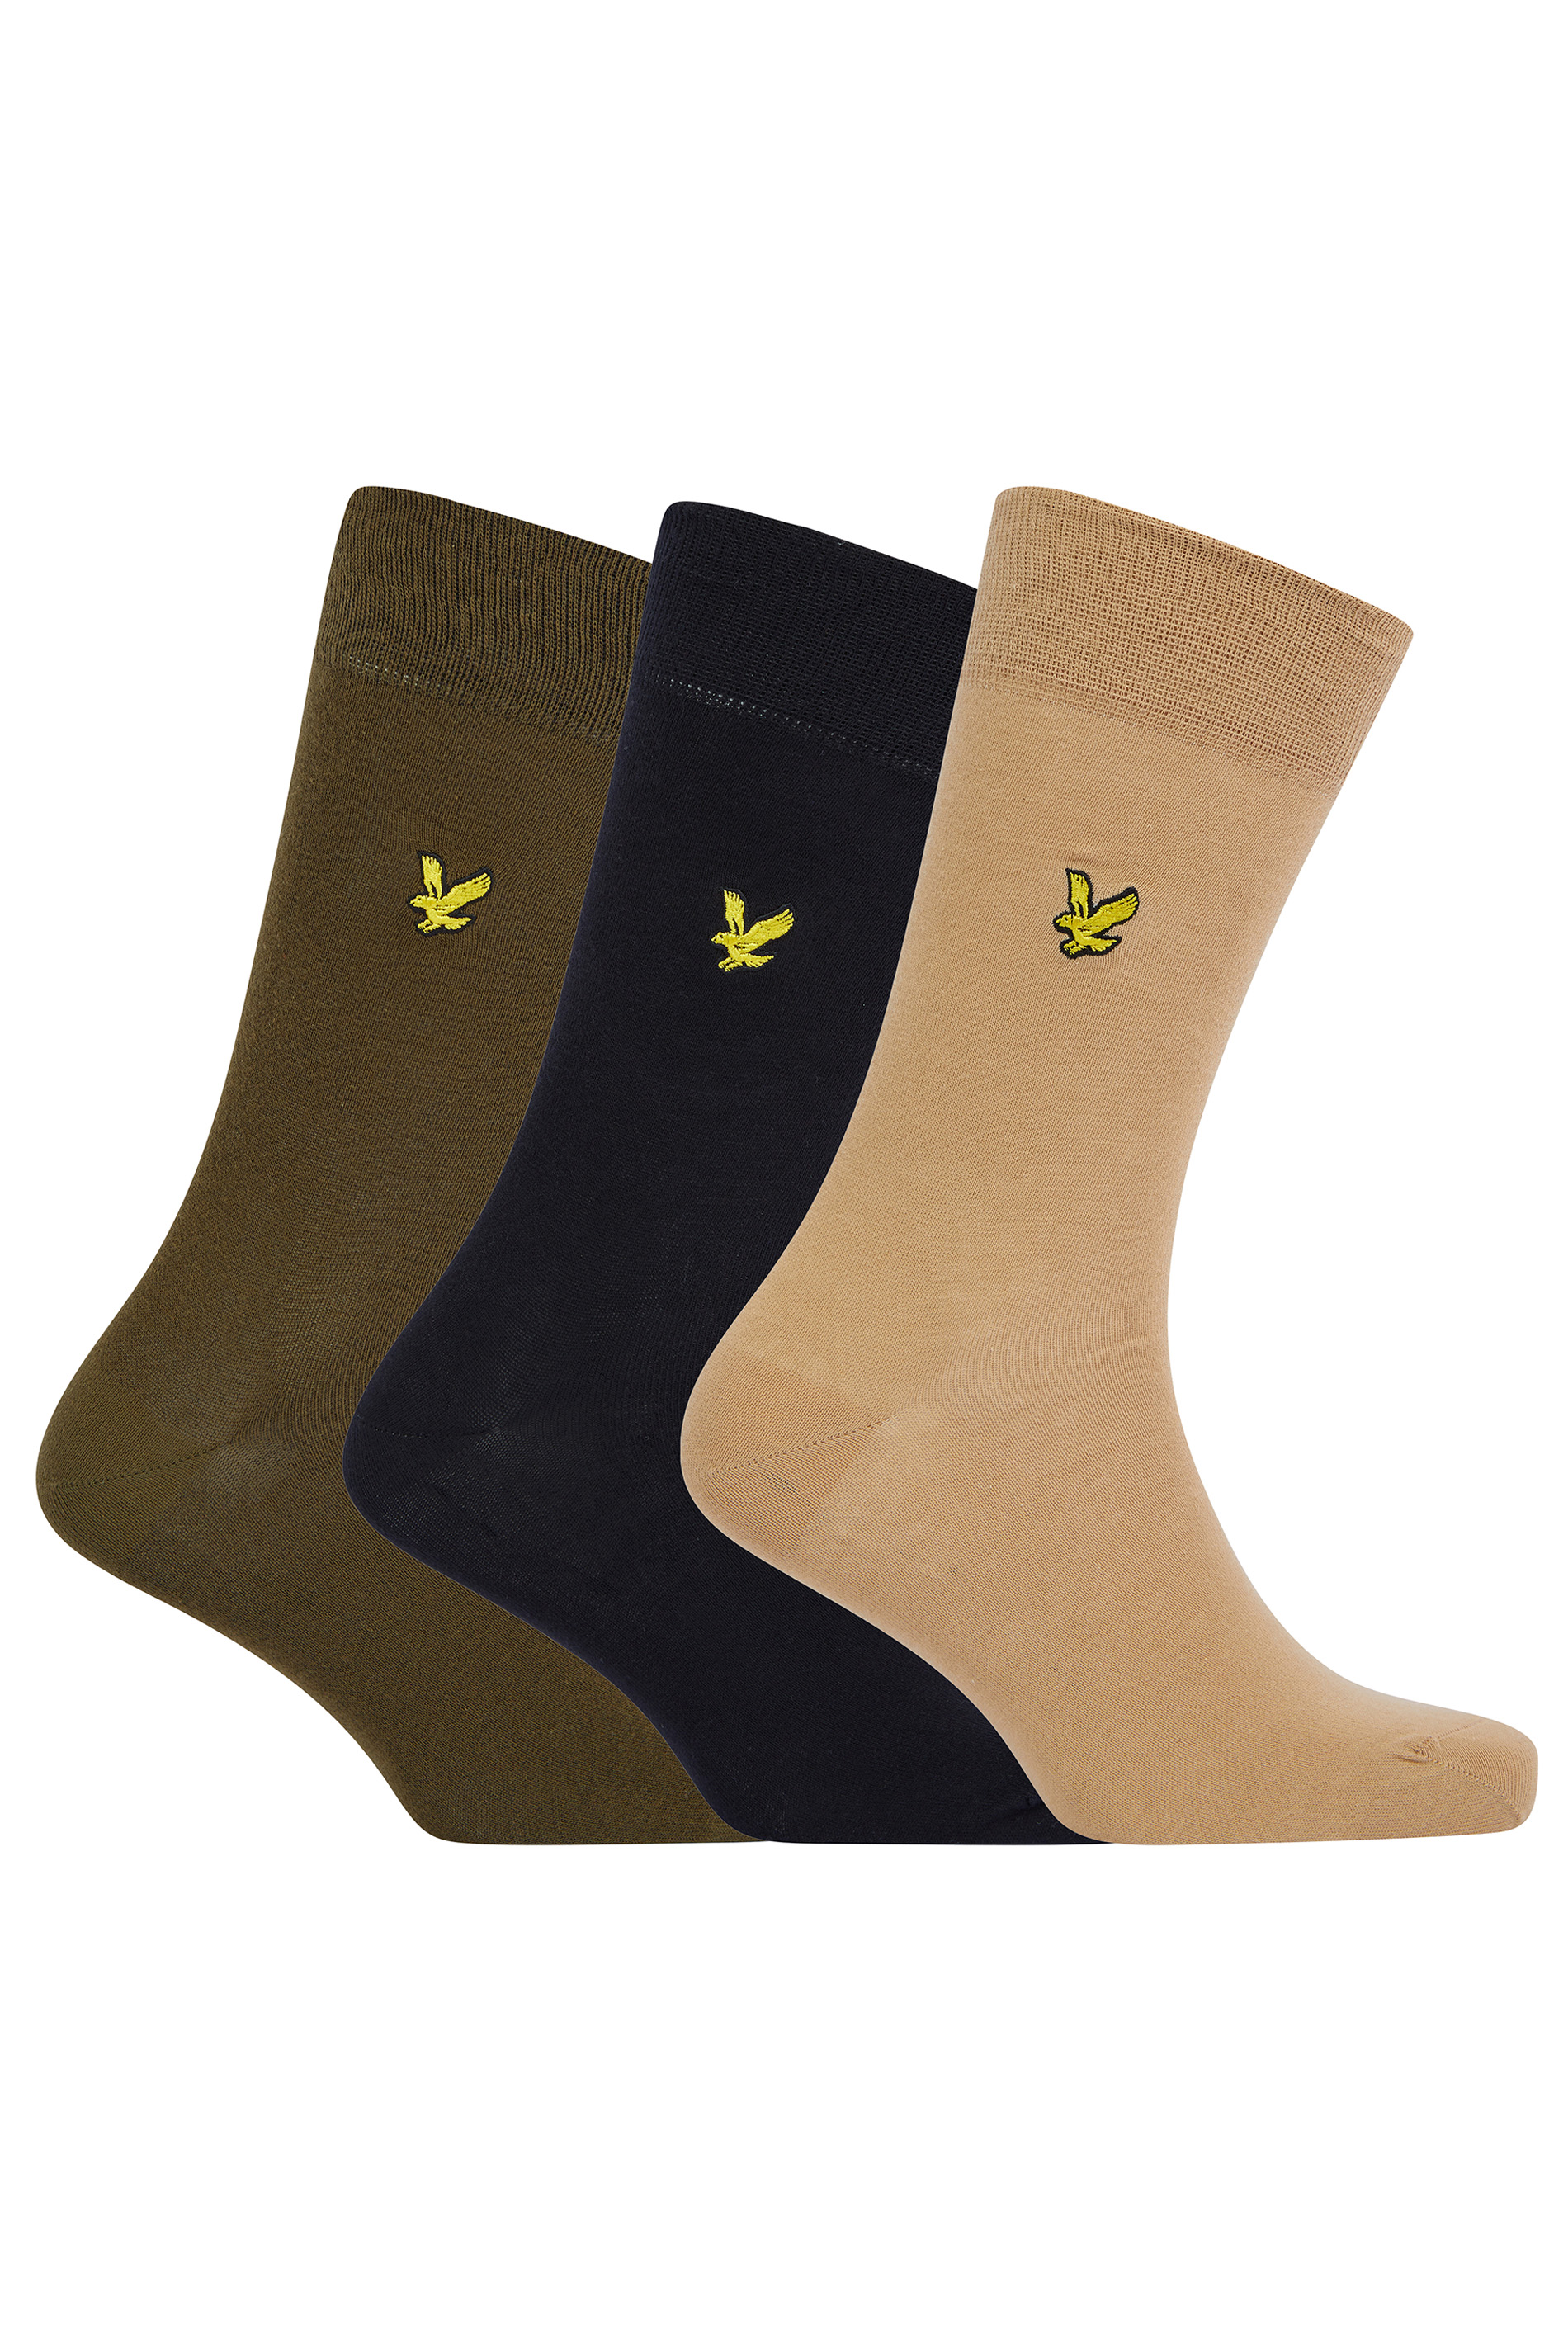 Lyle & Scott Black & Green 3 Pack Socks | BadRhino 1